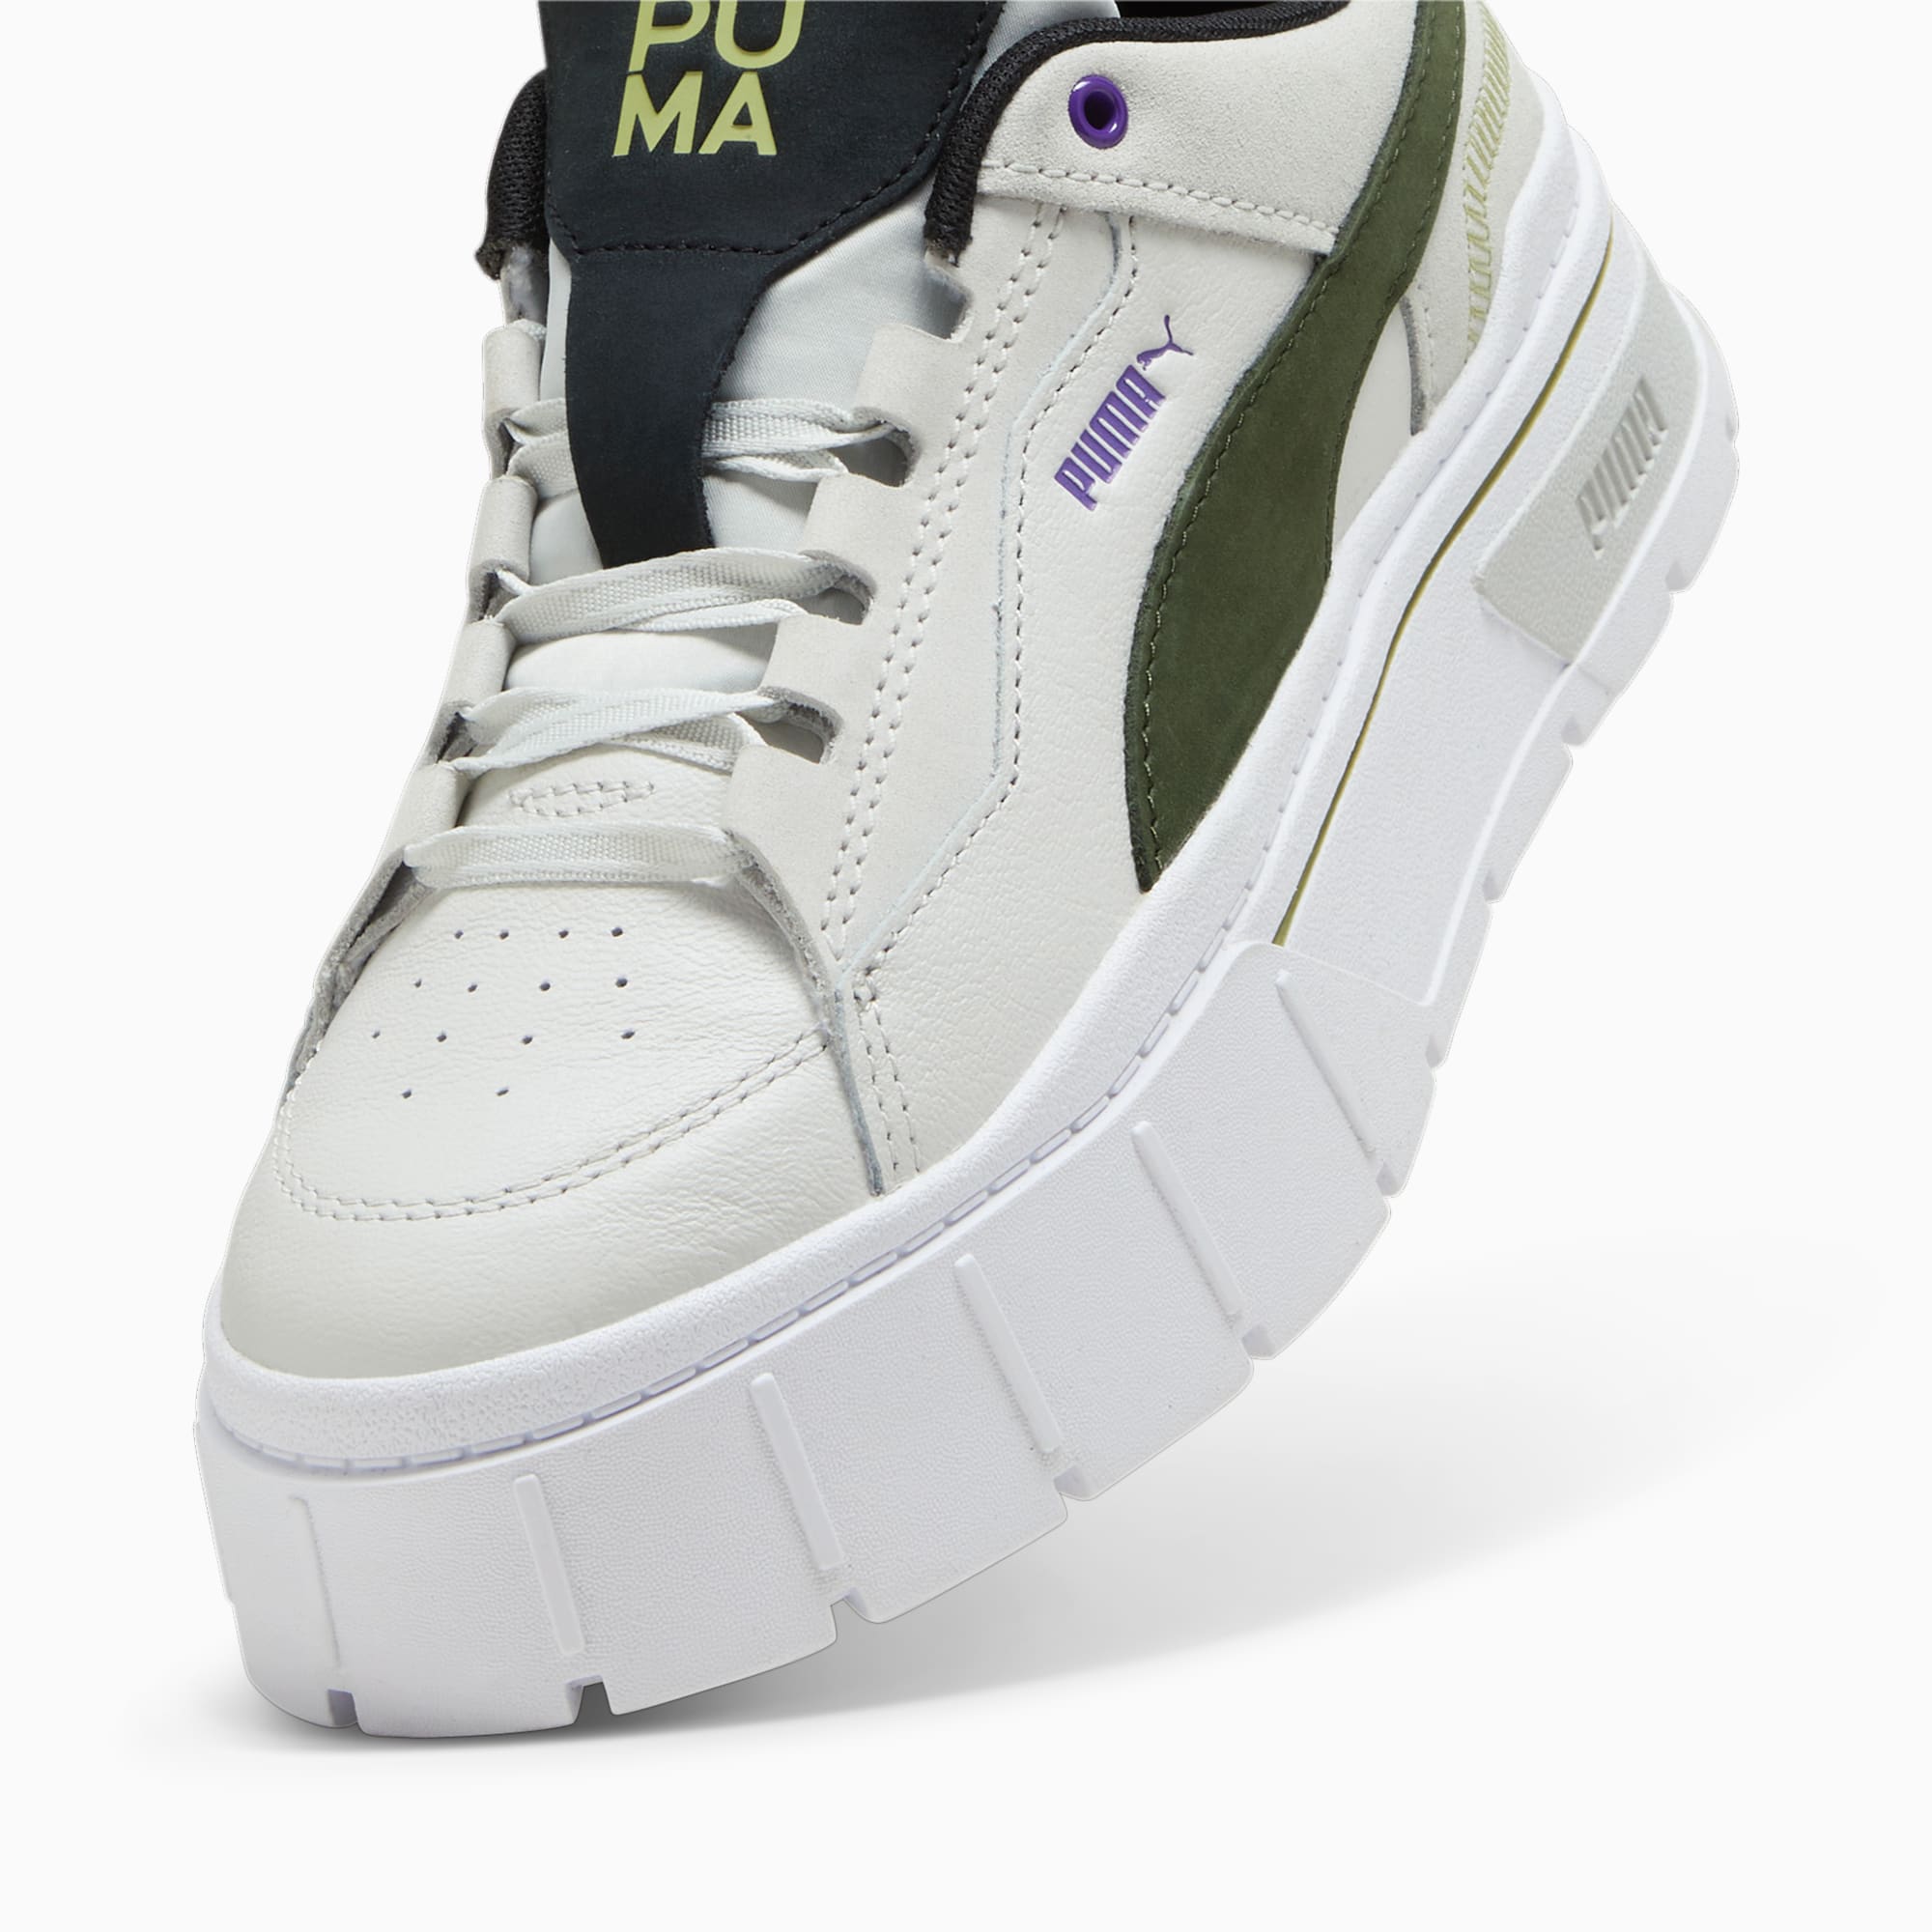 PUMA Mayze Stack Xpl Infuse Women's Sneakers, Sedate Grey